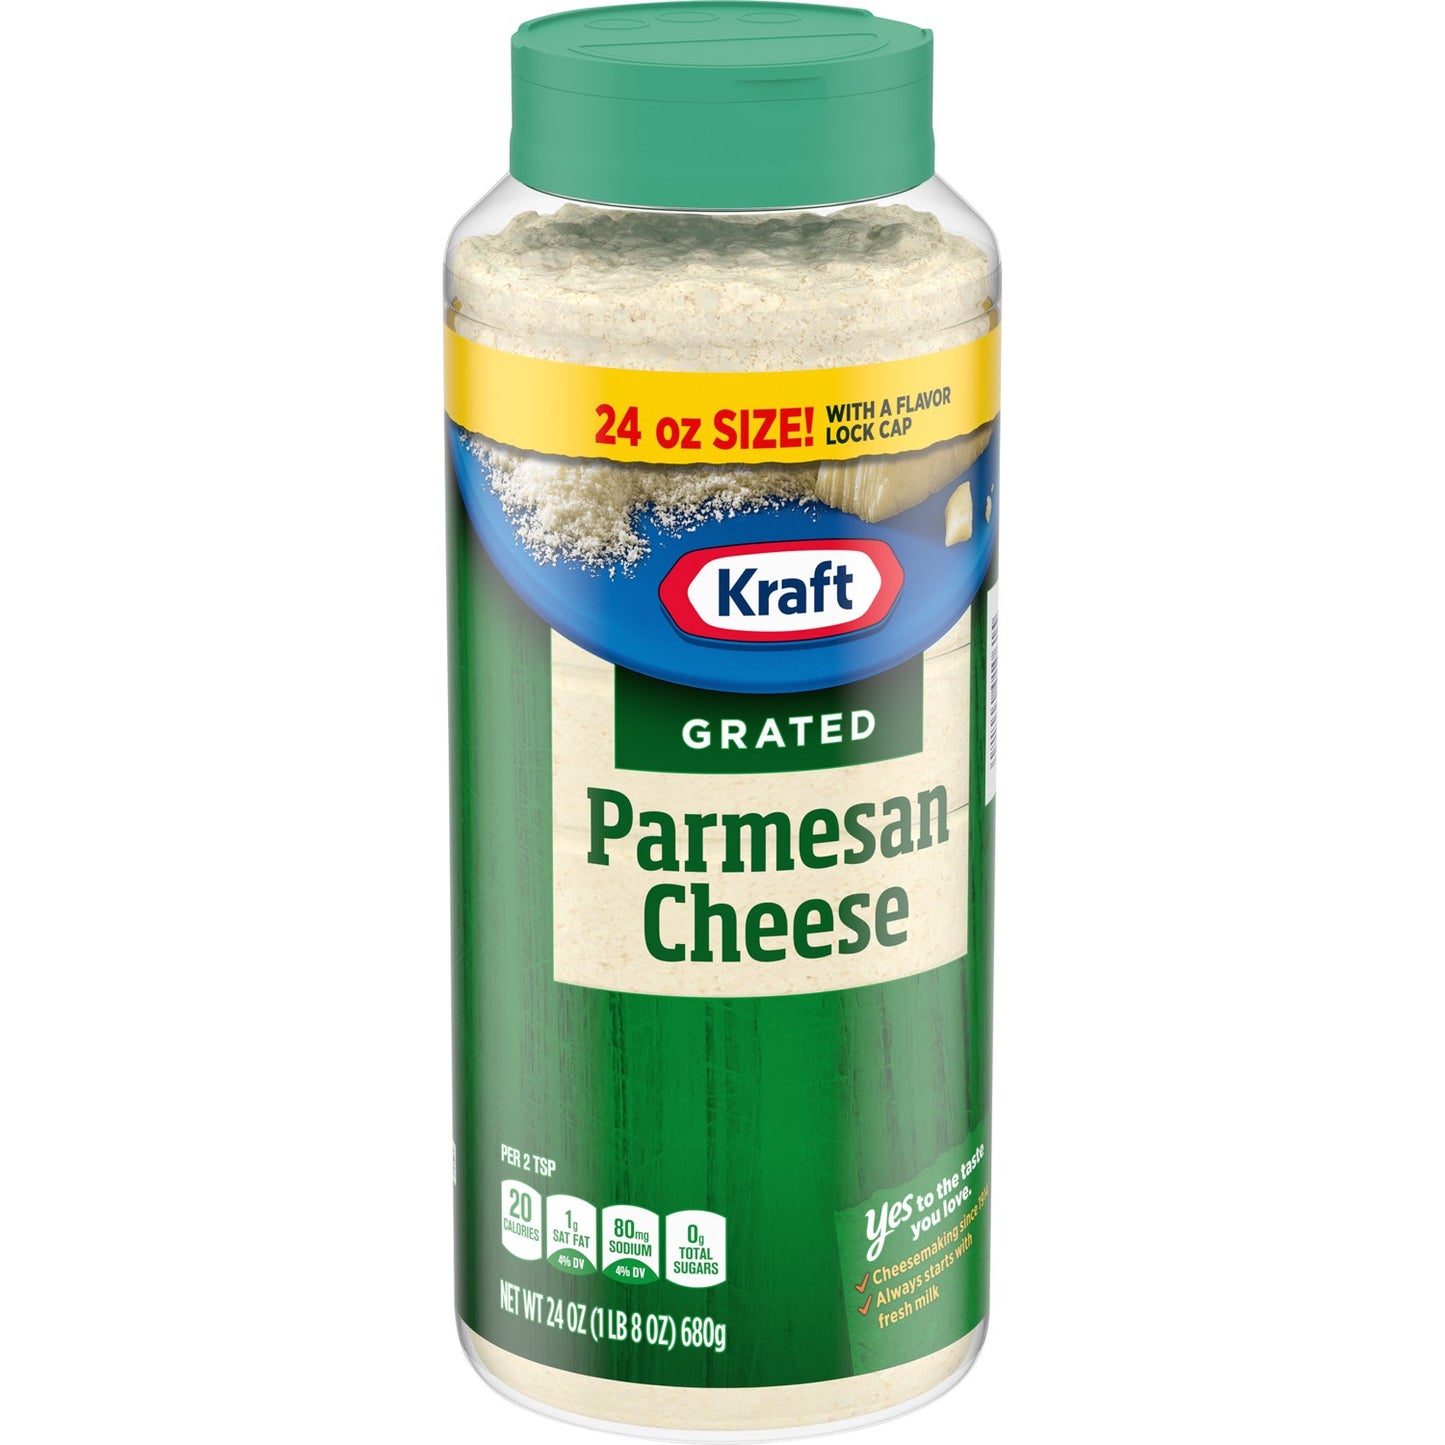 Kraft Grated Parmesan Cheese enhances pastas pizzas shaker bottle of 24oz (680g)